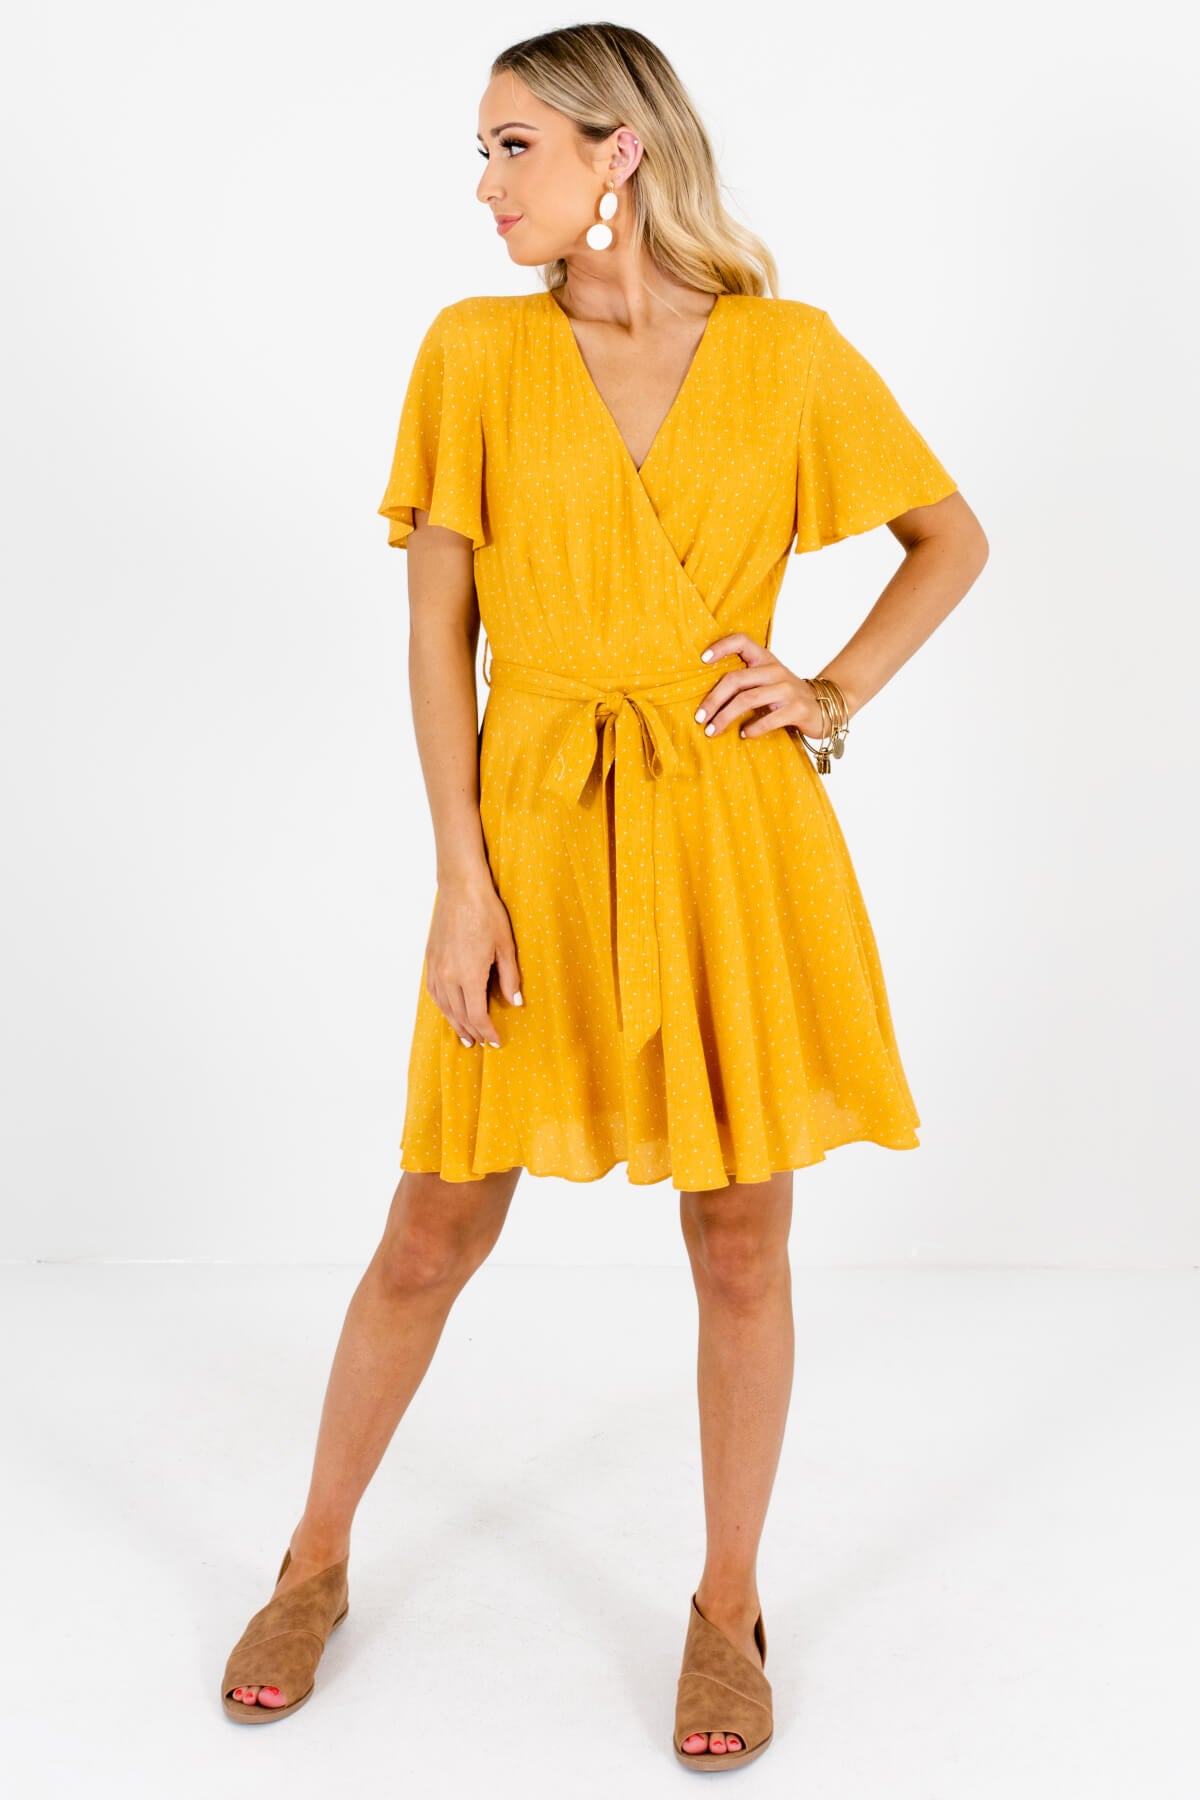 Your Type Mustard Polka Dot Mini Dress | Boutique Mini Dress